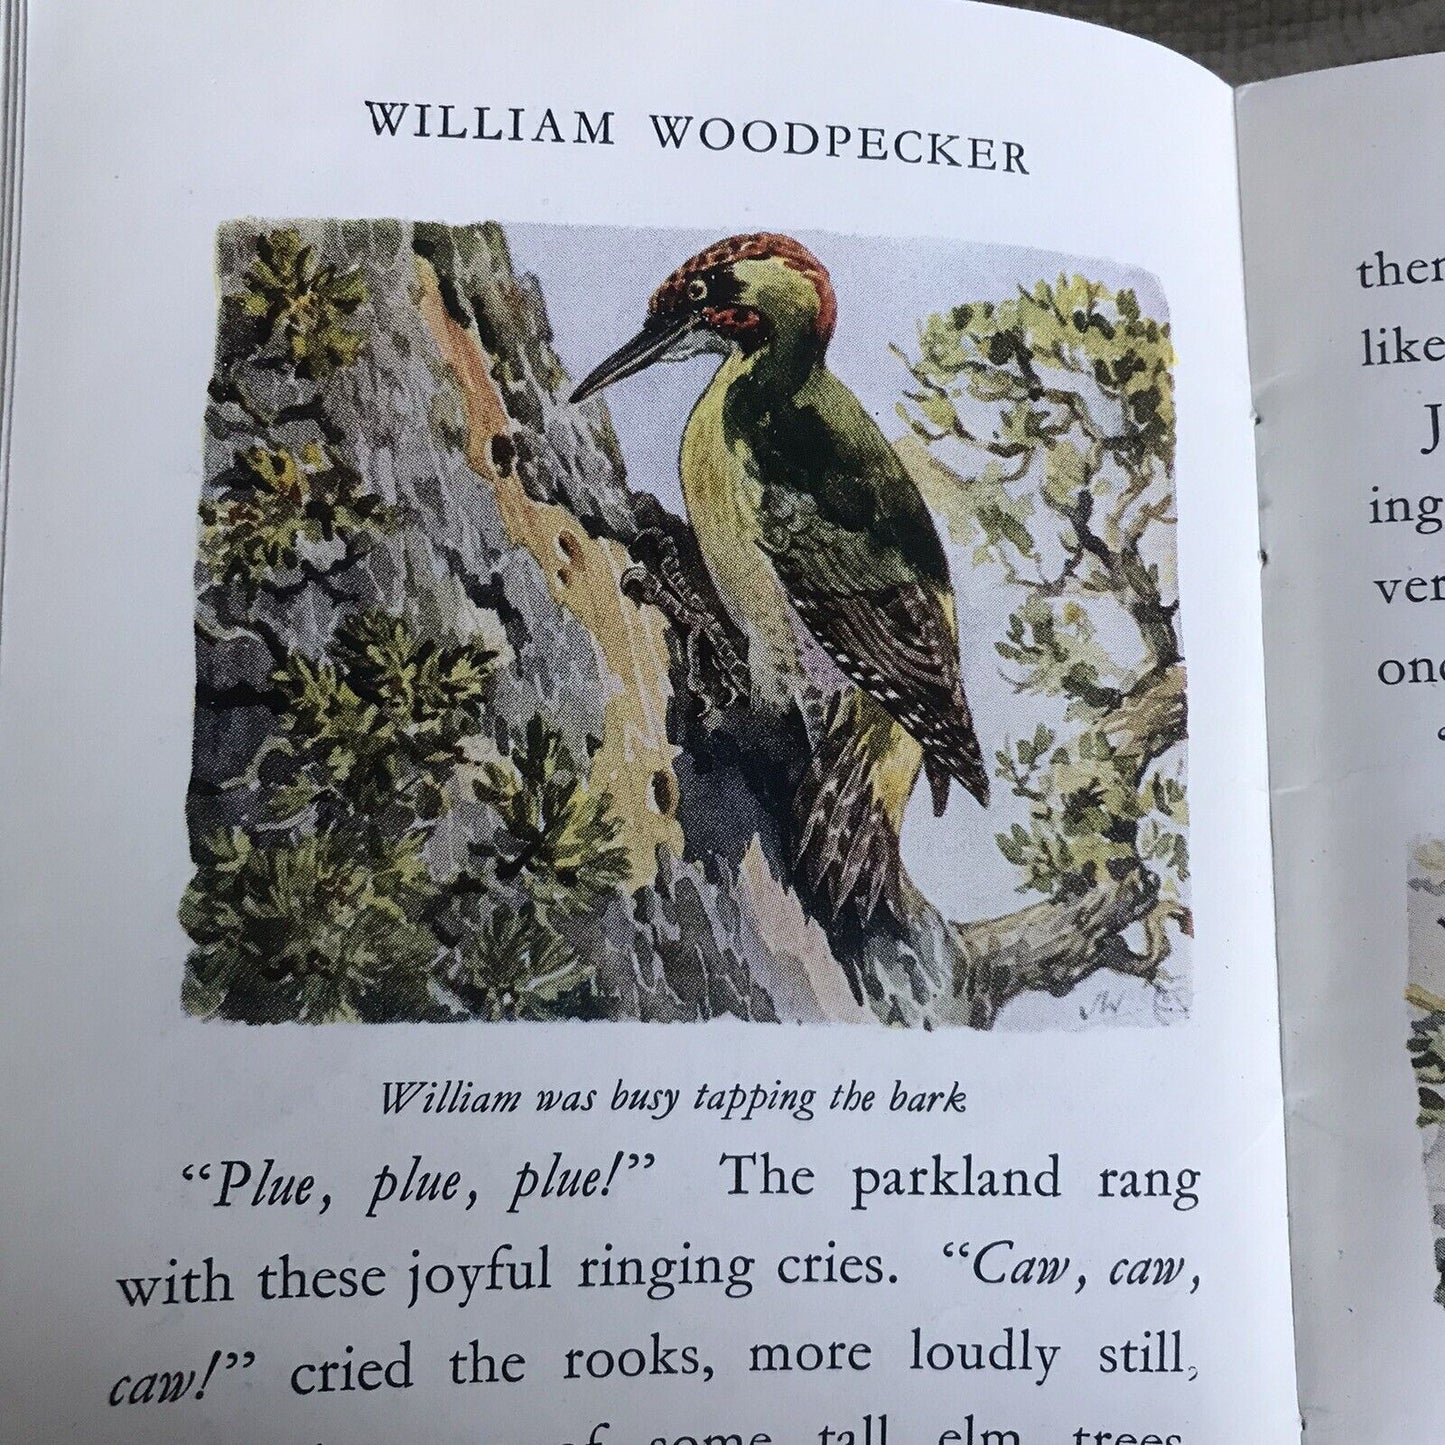 1950 Tales Of The Wild Folk: William Woodpecker - Cecily M. Rutley (Joan Wanklyn Honeyburn Books (UK)